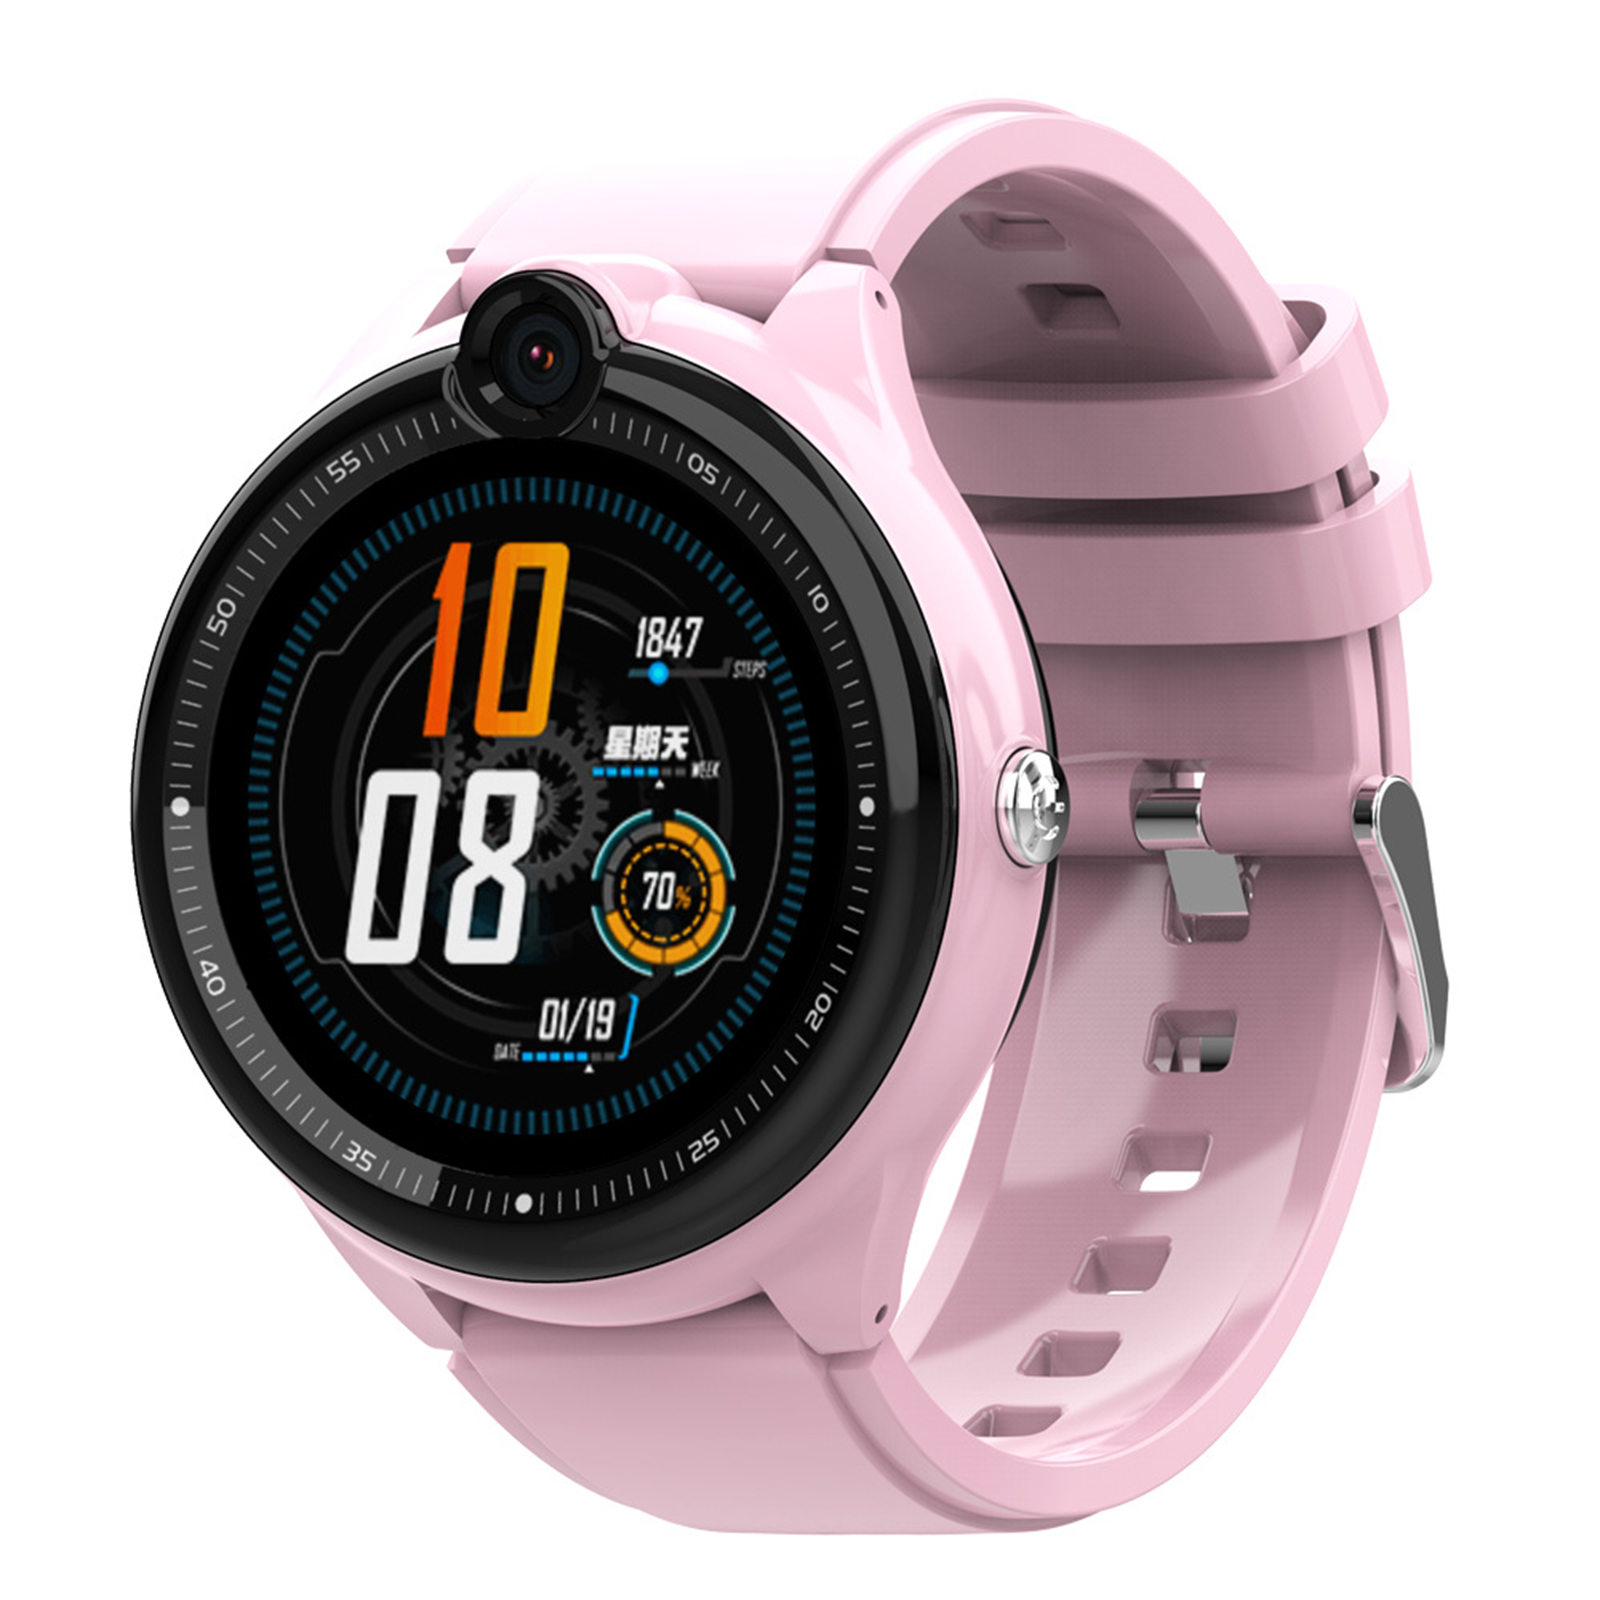 Y2 Kids Smart Watch 4g GPS Tracking Positioning Waterproof Smartwatch